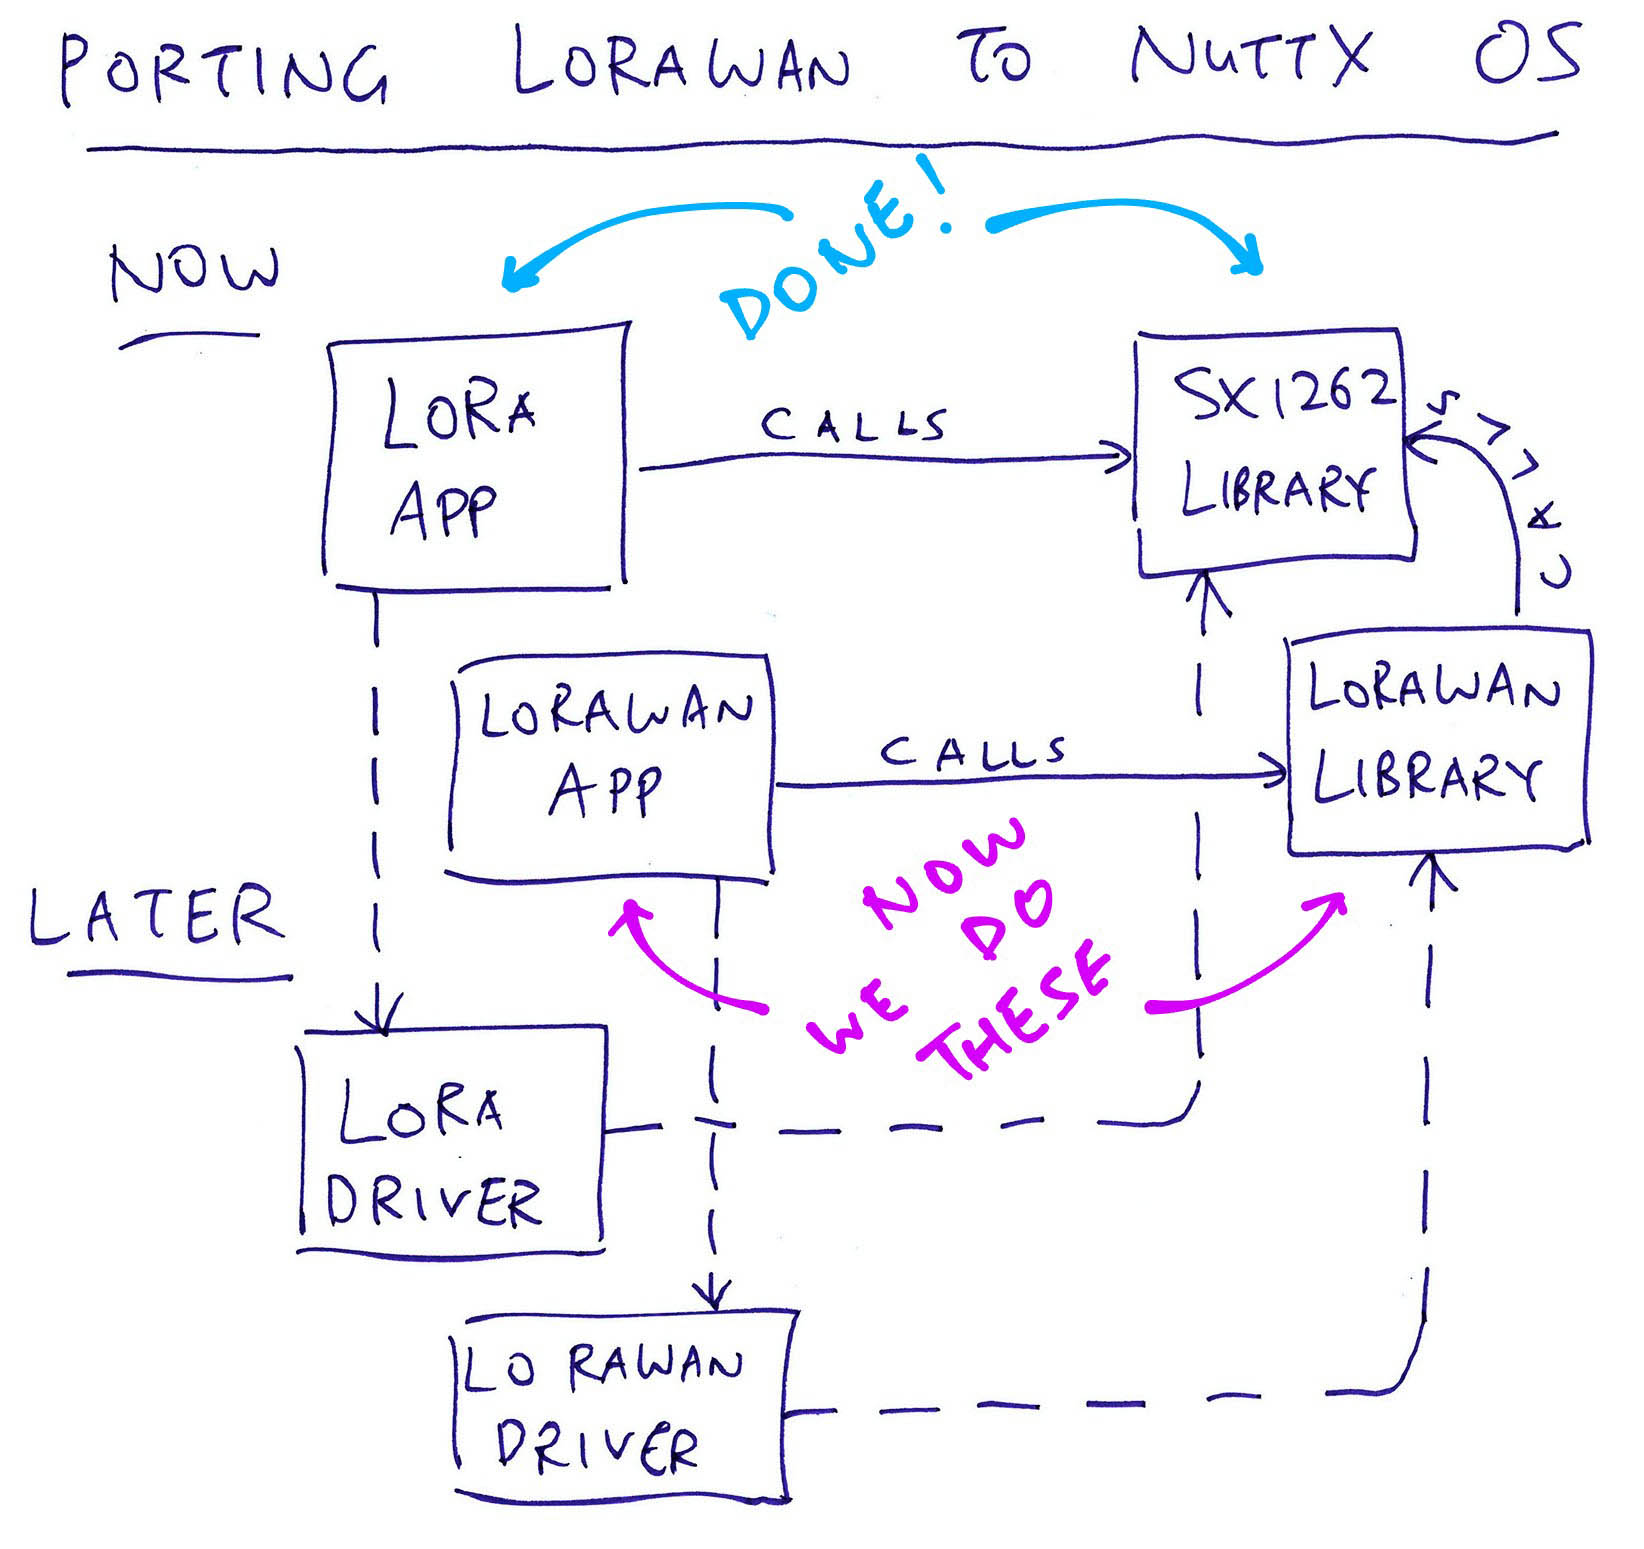 Porting LoRaWAN to NuttX OS